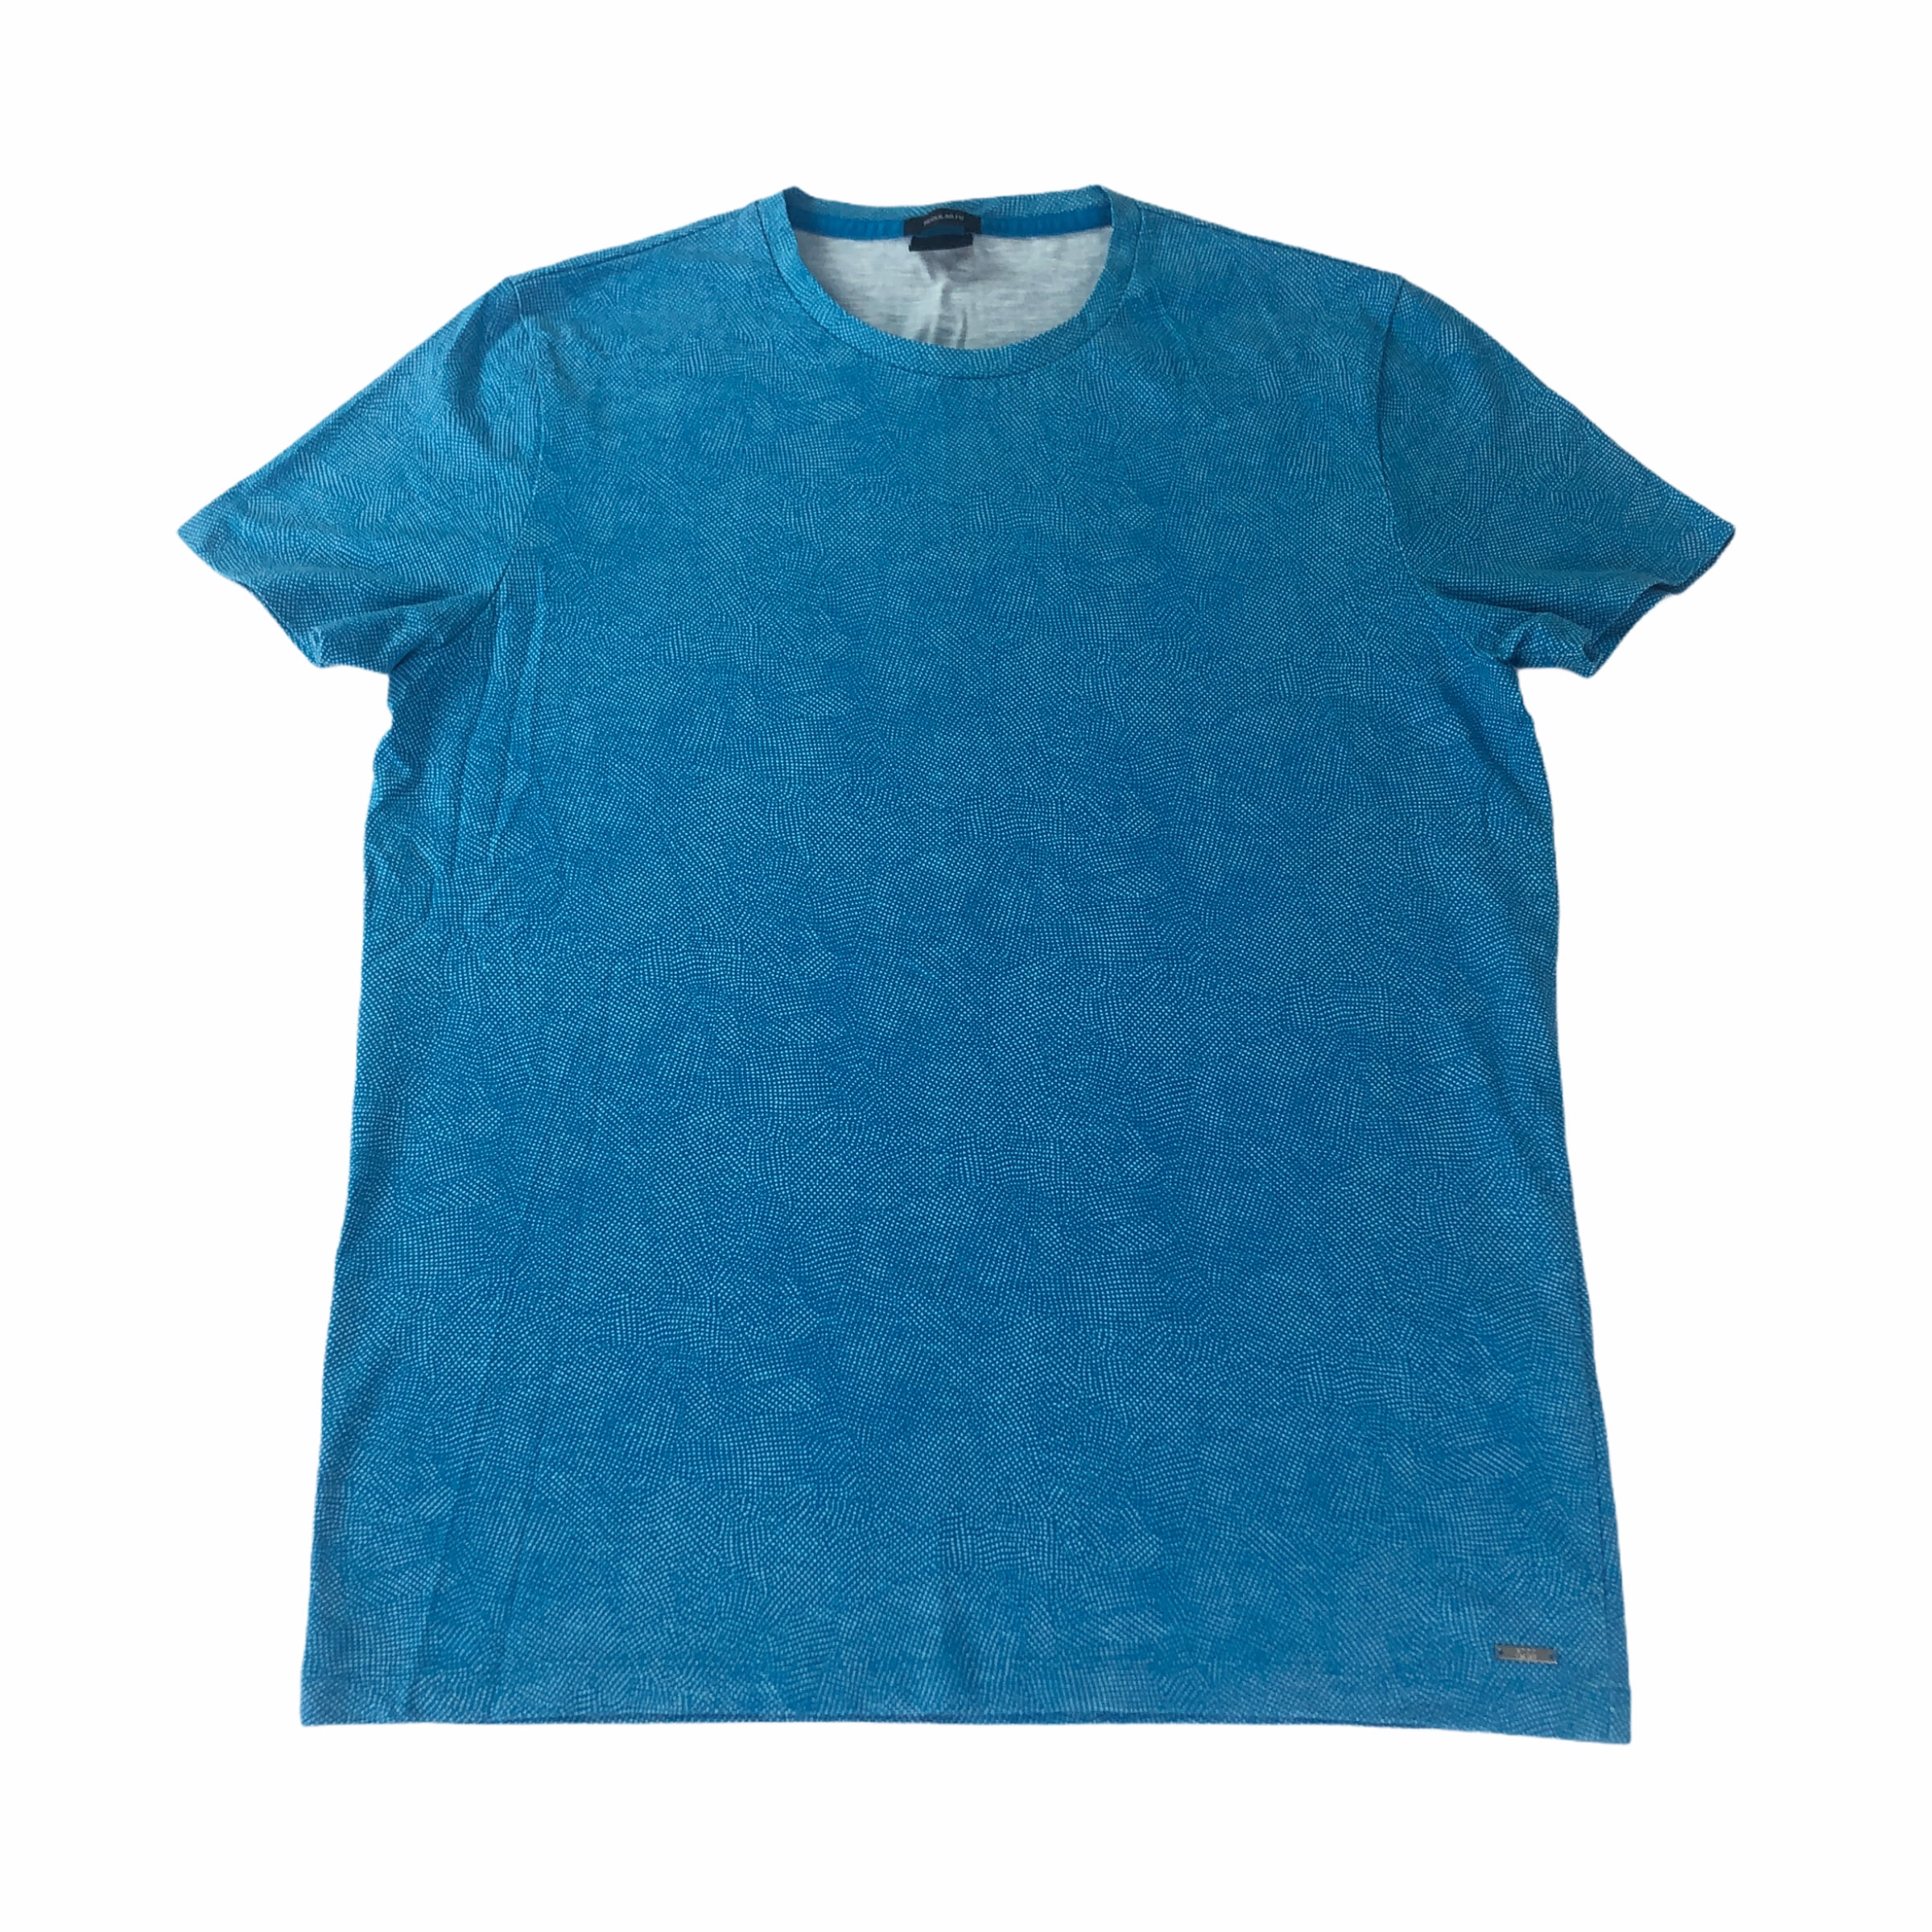 [Hugo Boss] Blue Dot Print Tshirt - Size L